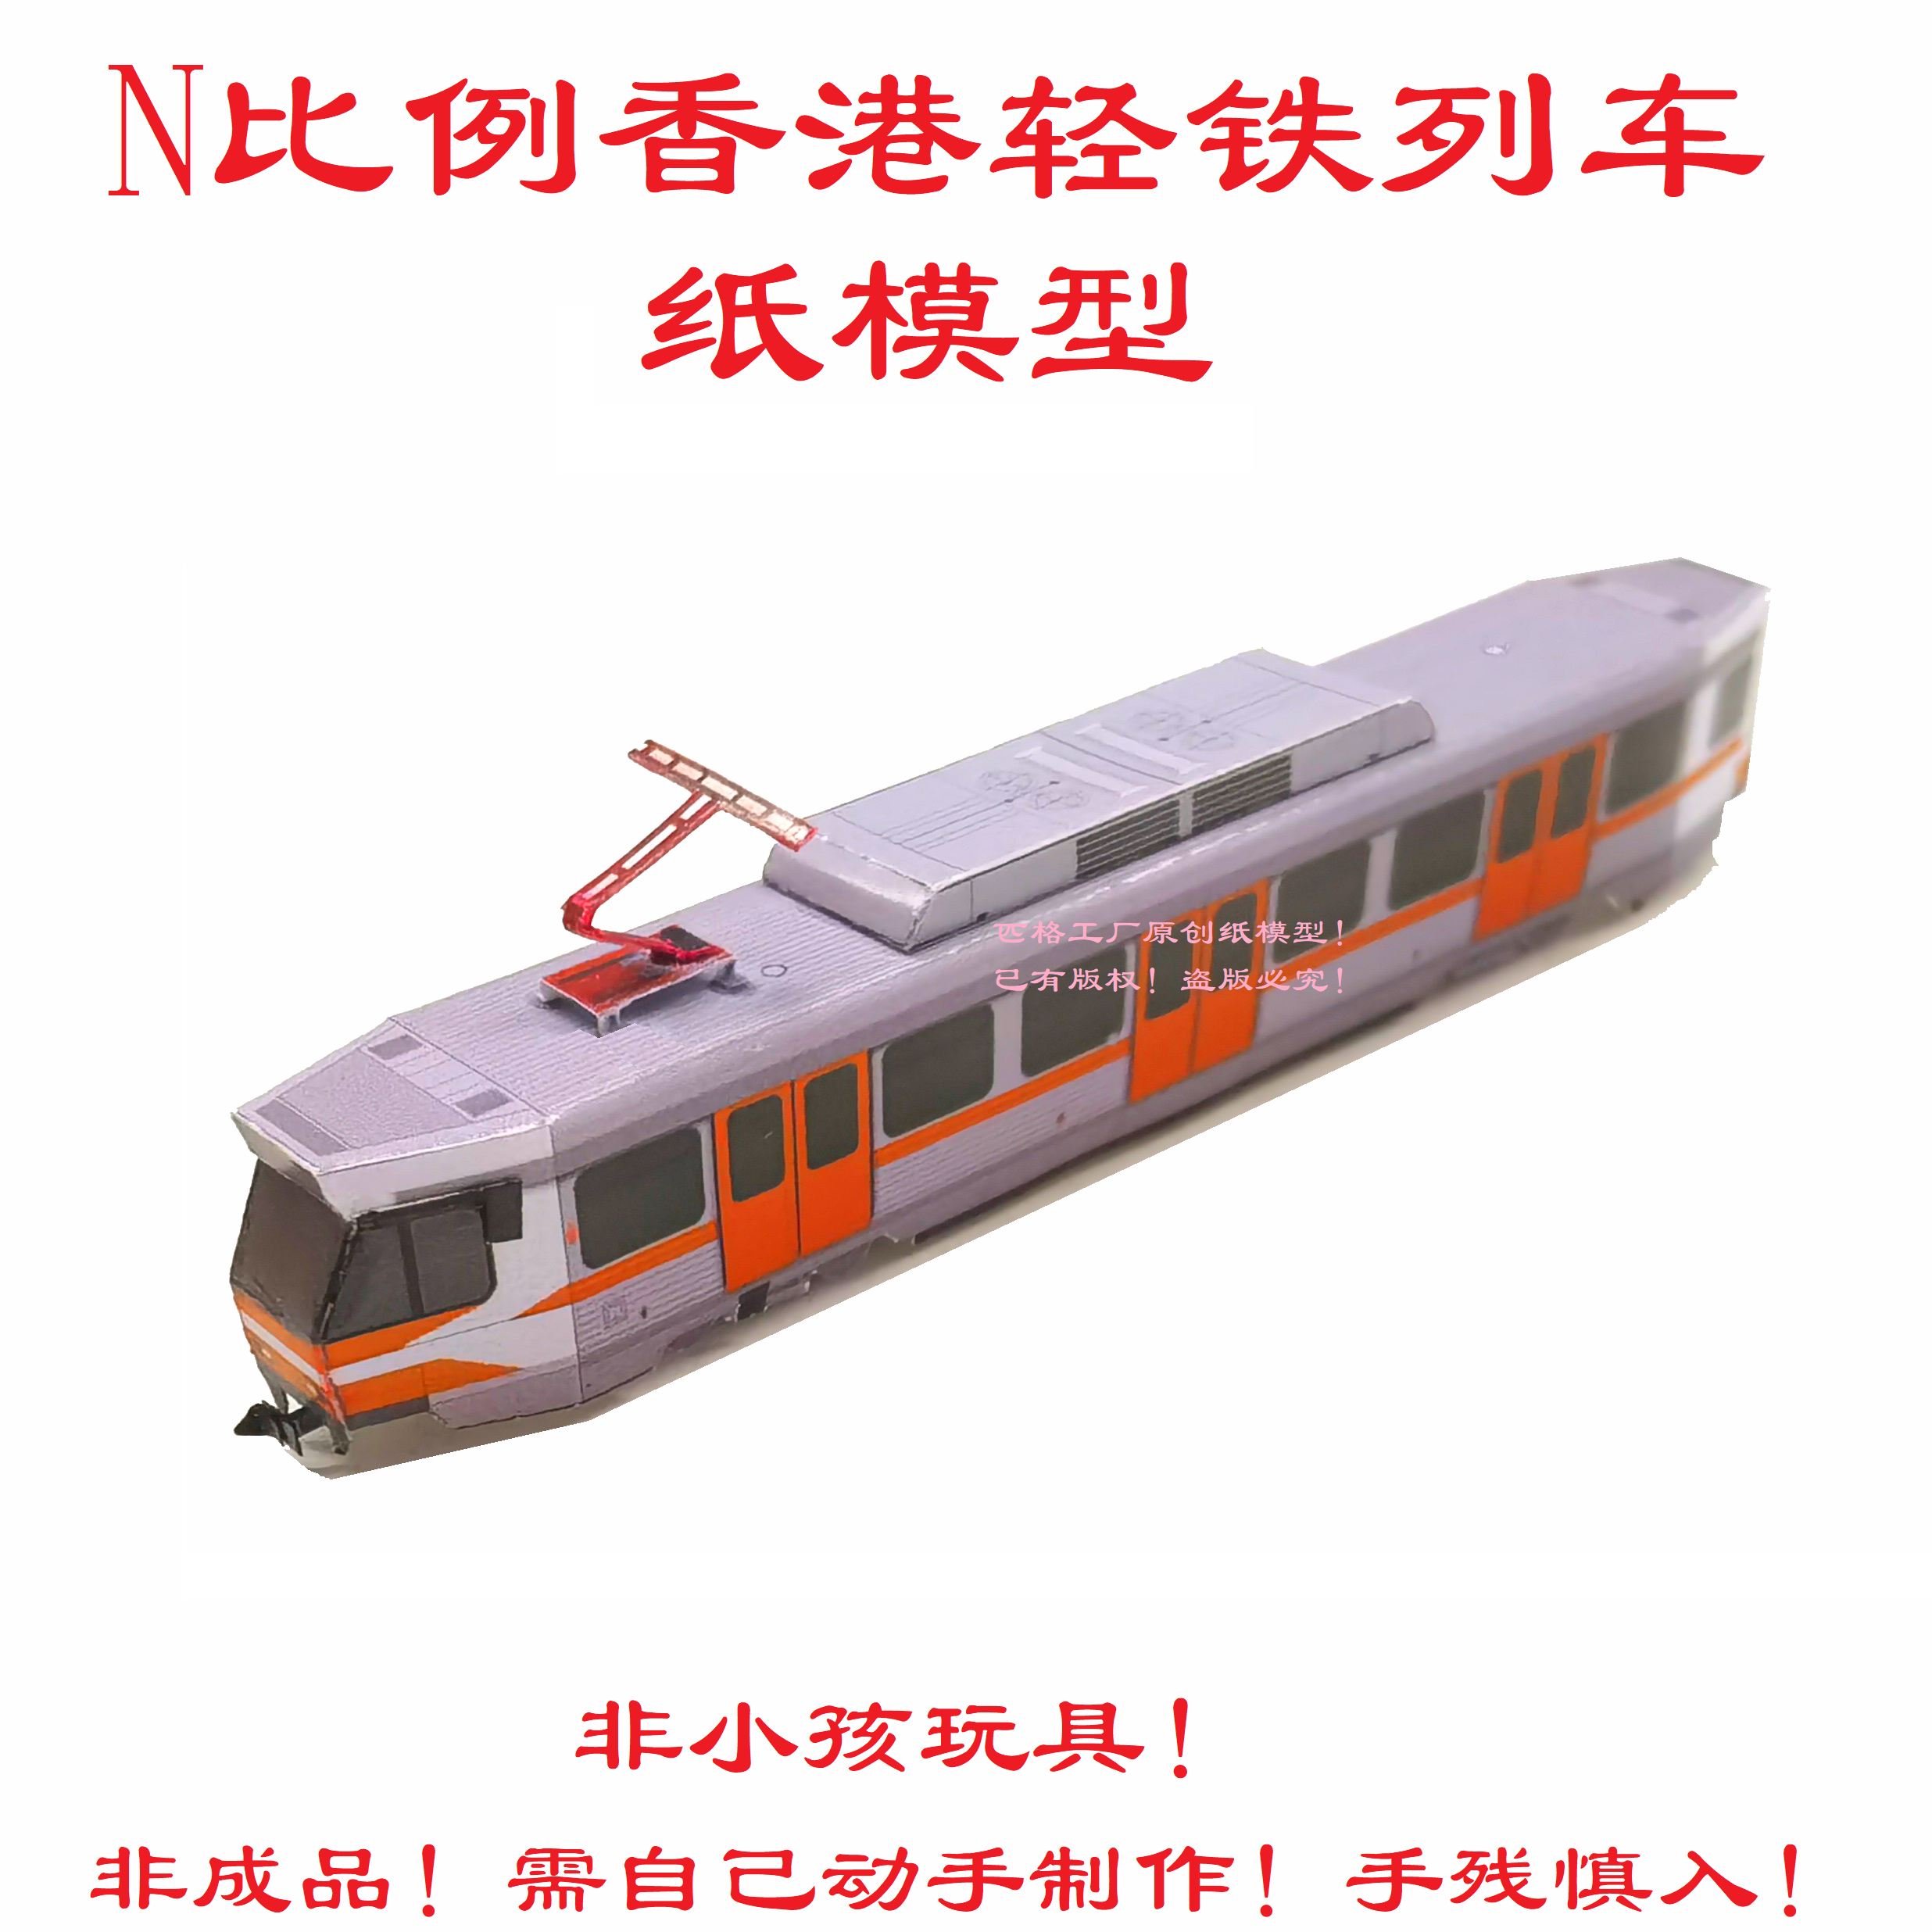 n比例香港港铁70年代旧涂装MTR有轨电车轻铁地铁纸模DIY手工模型